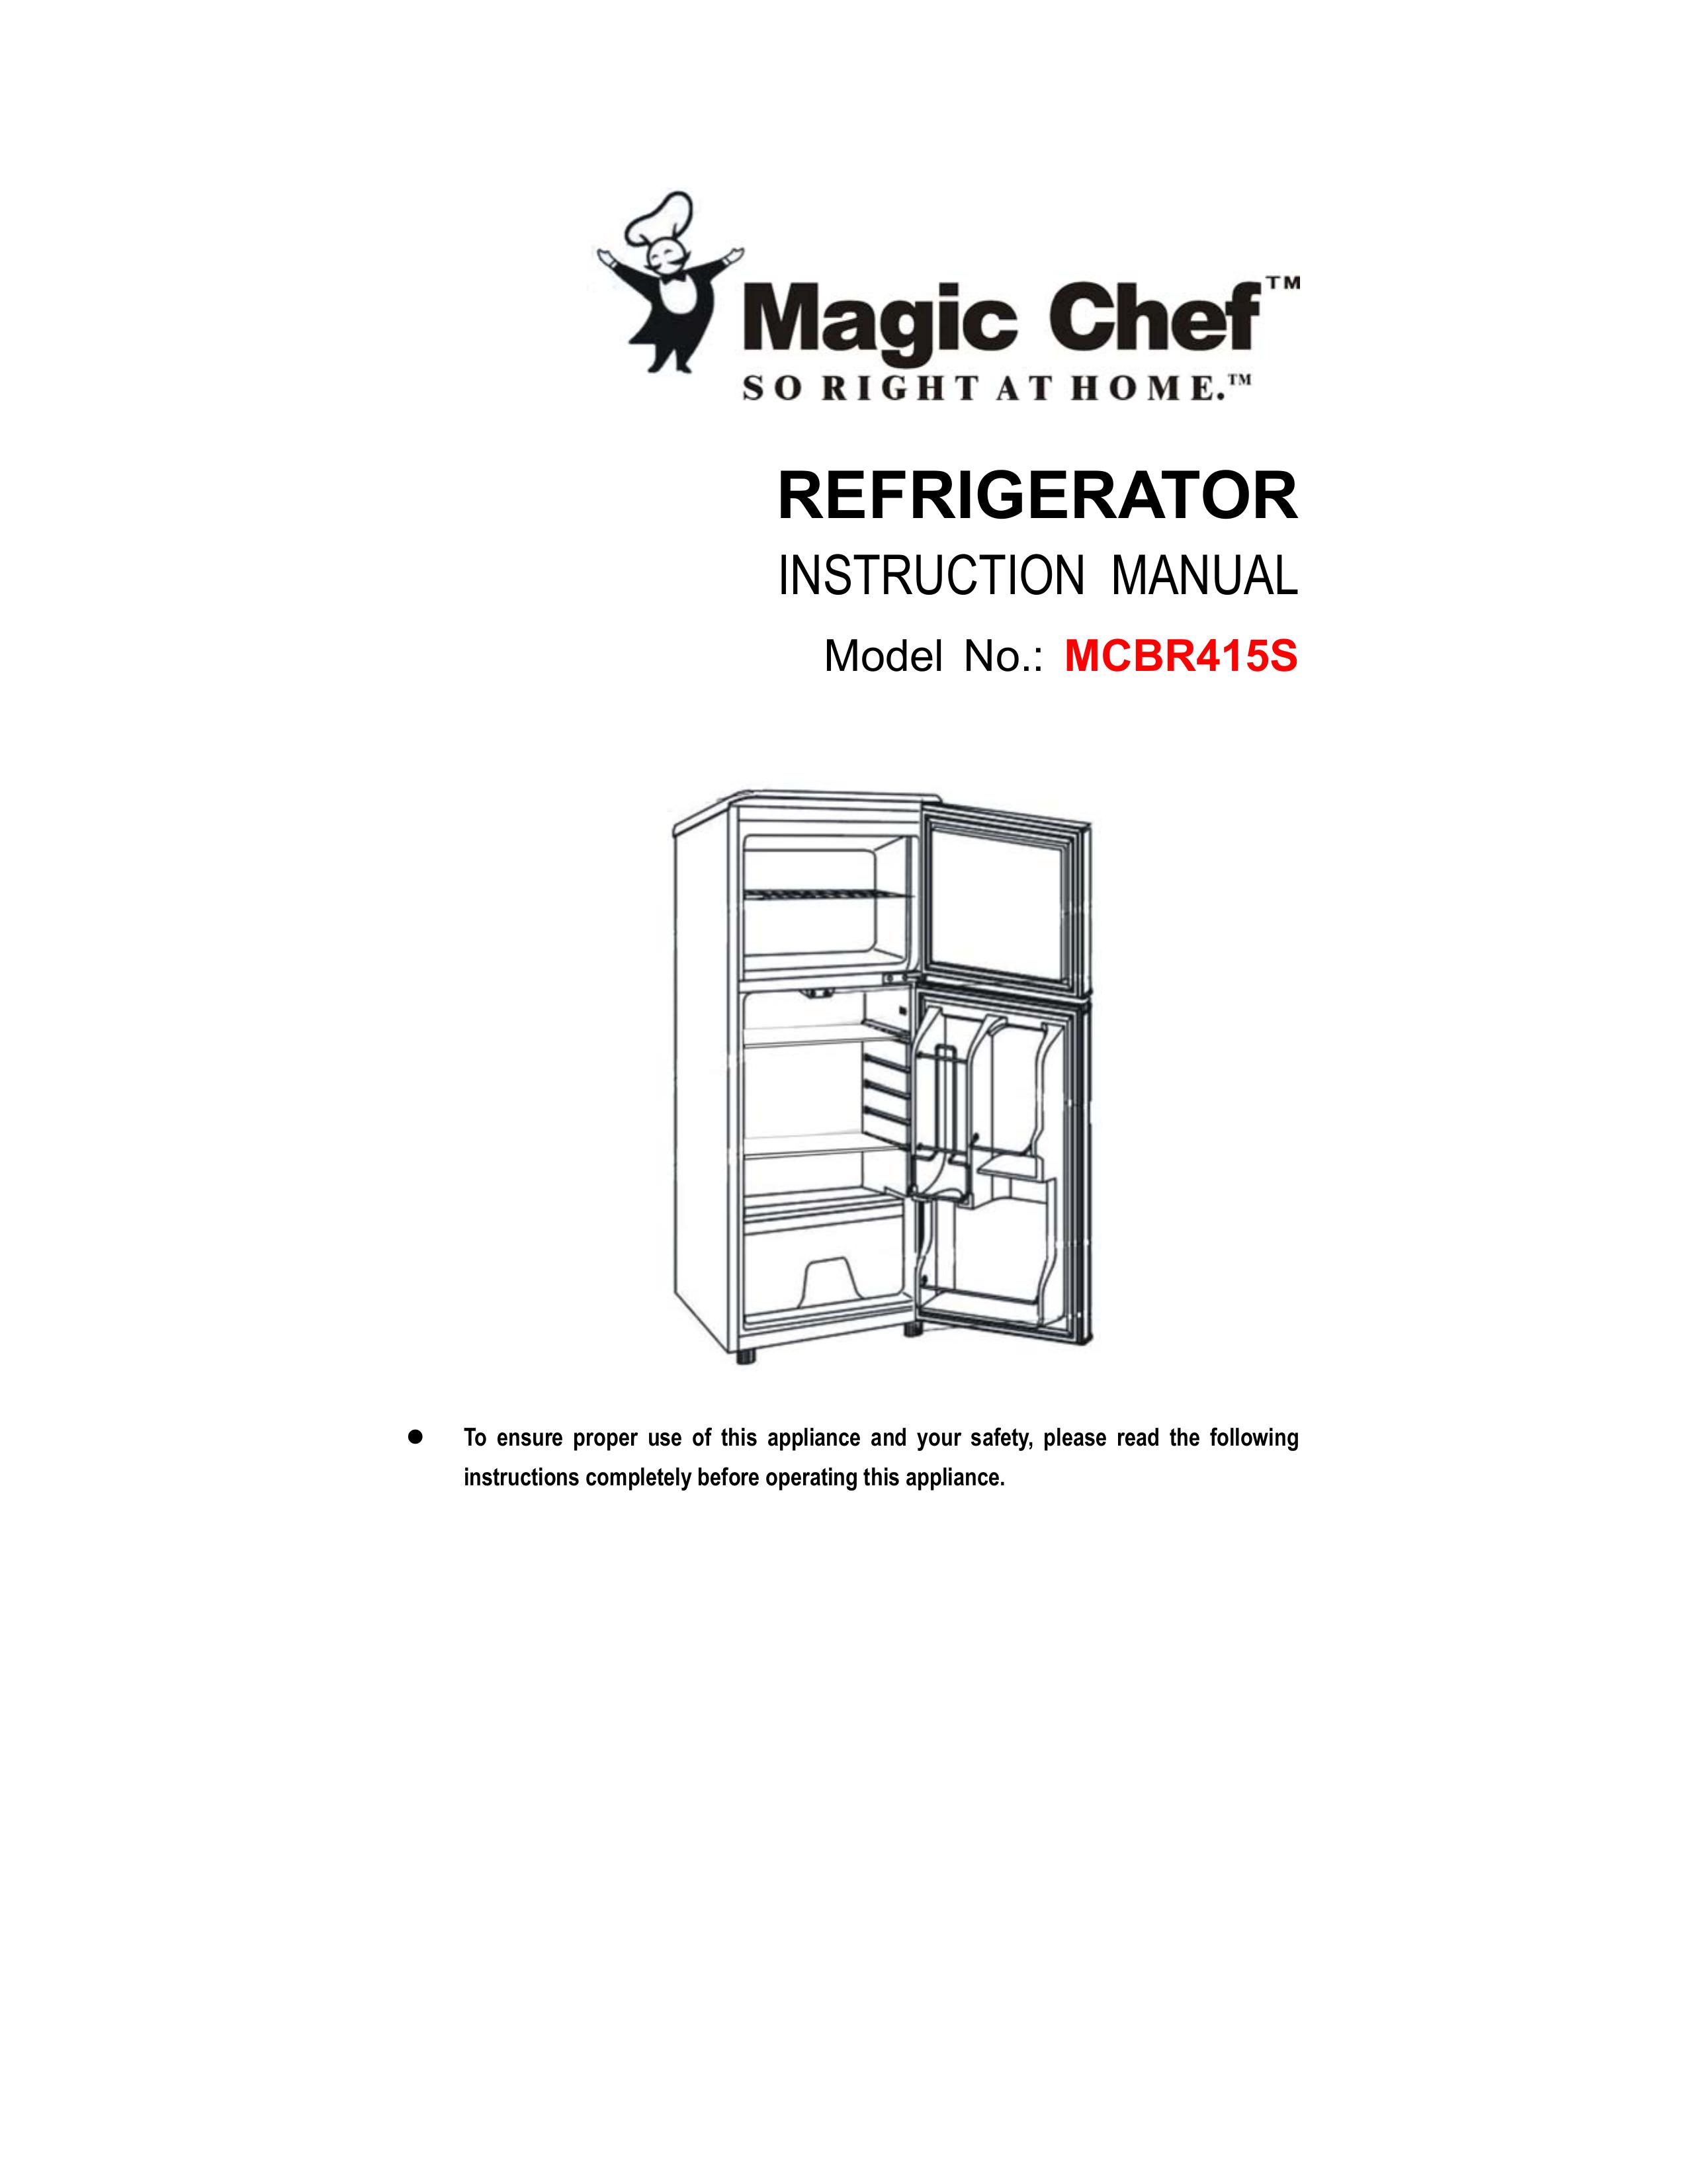 Magic Chef MCBR415S Refrigerator User Manual